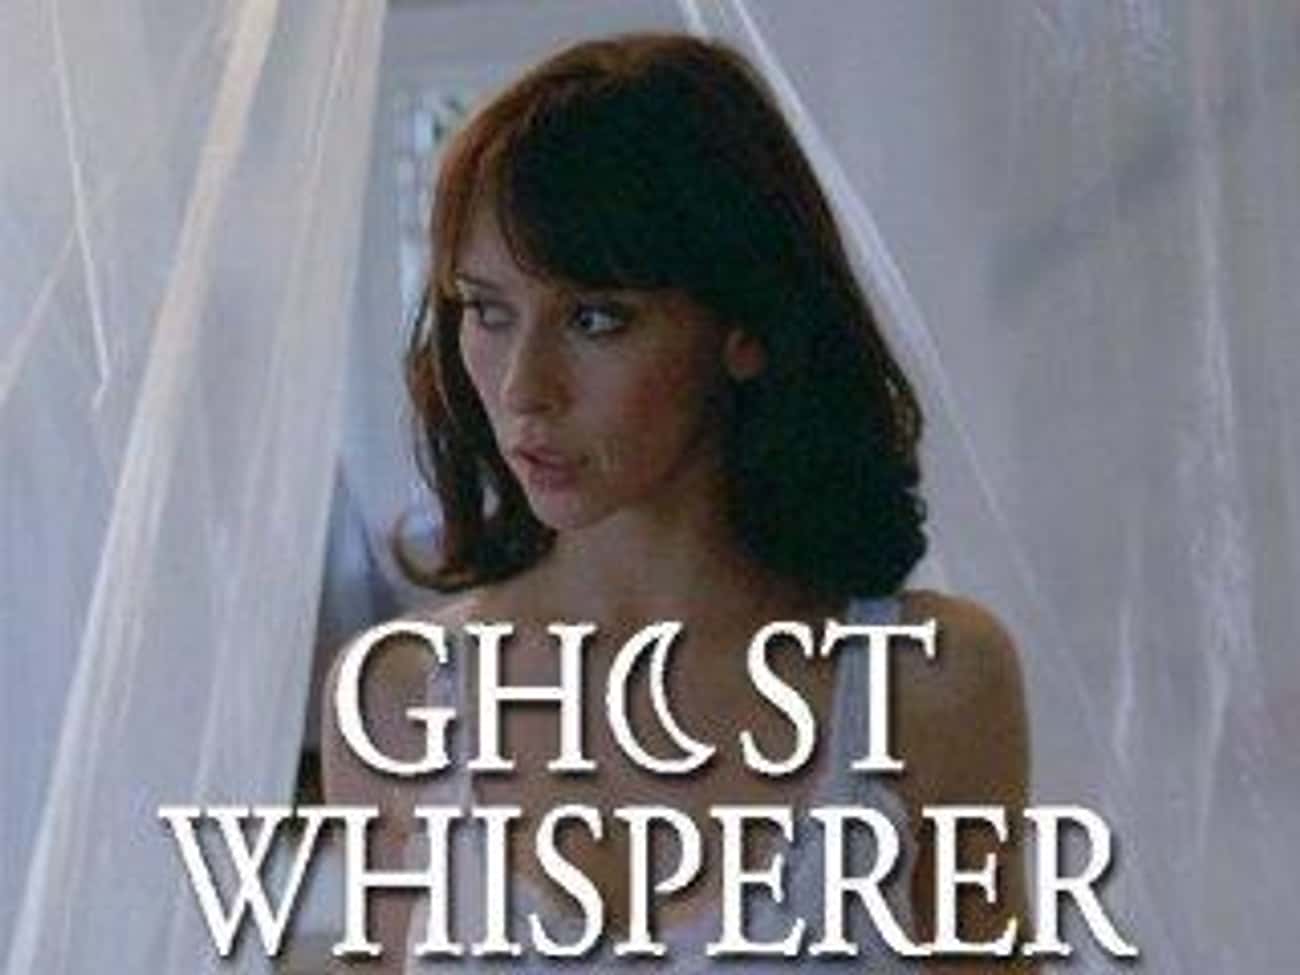 ghost whisperer season 1 complete download